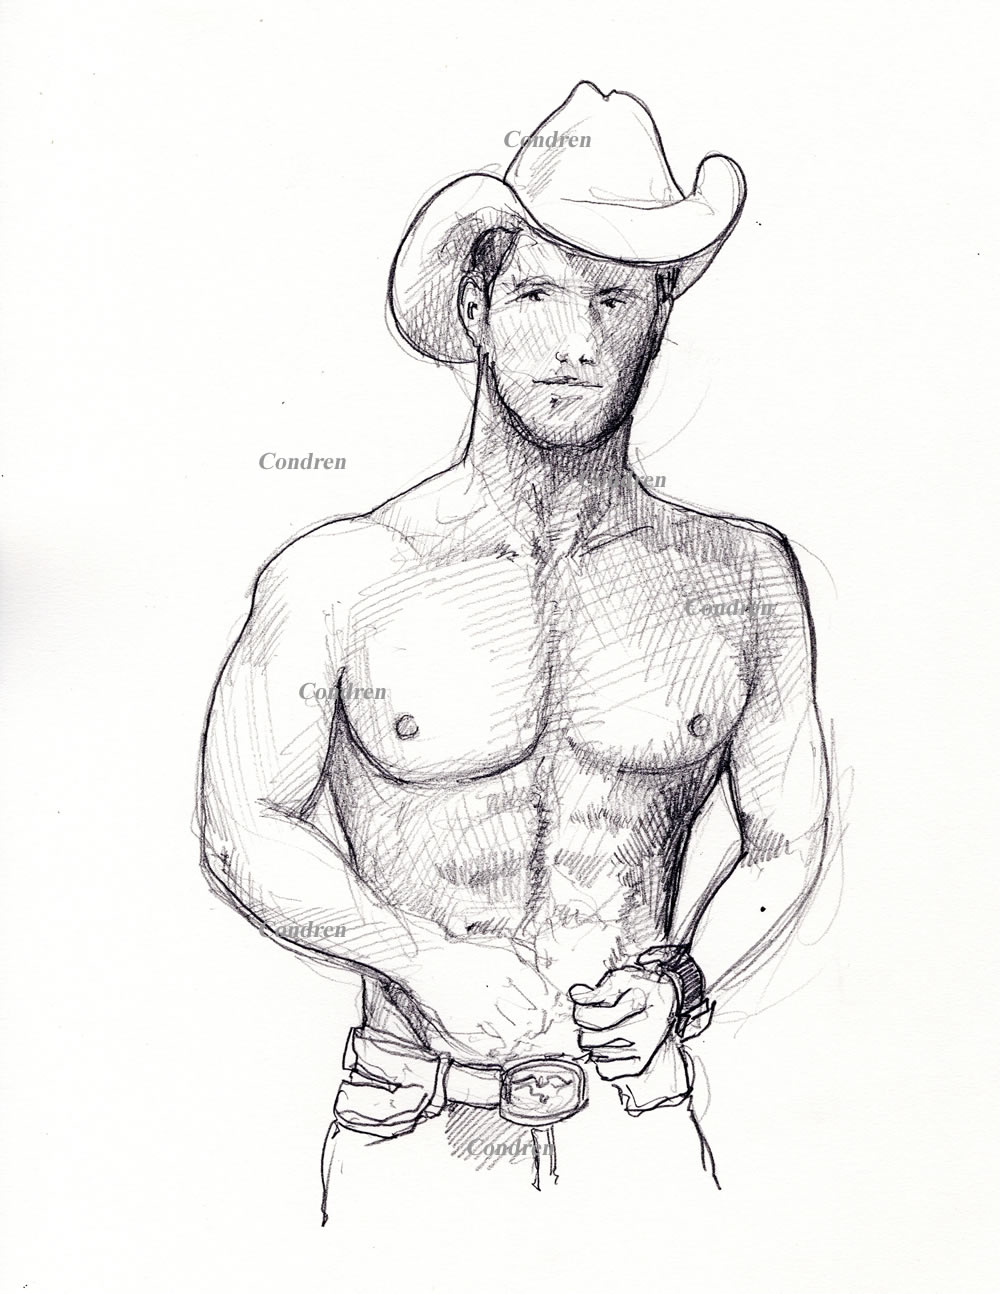 Gay cowboy drawing #476Z, in pencil, by artist Stephen F. Condren.